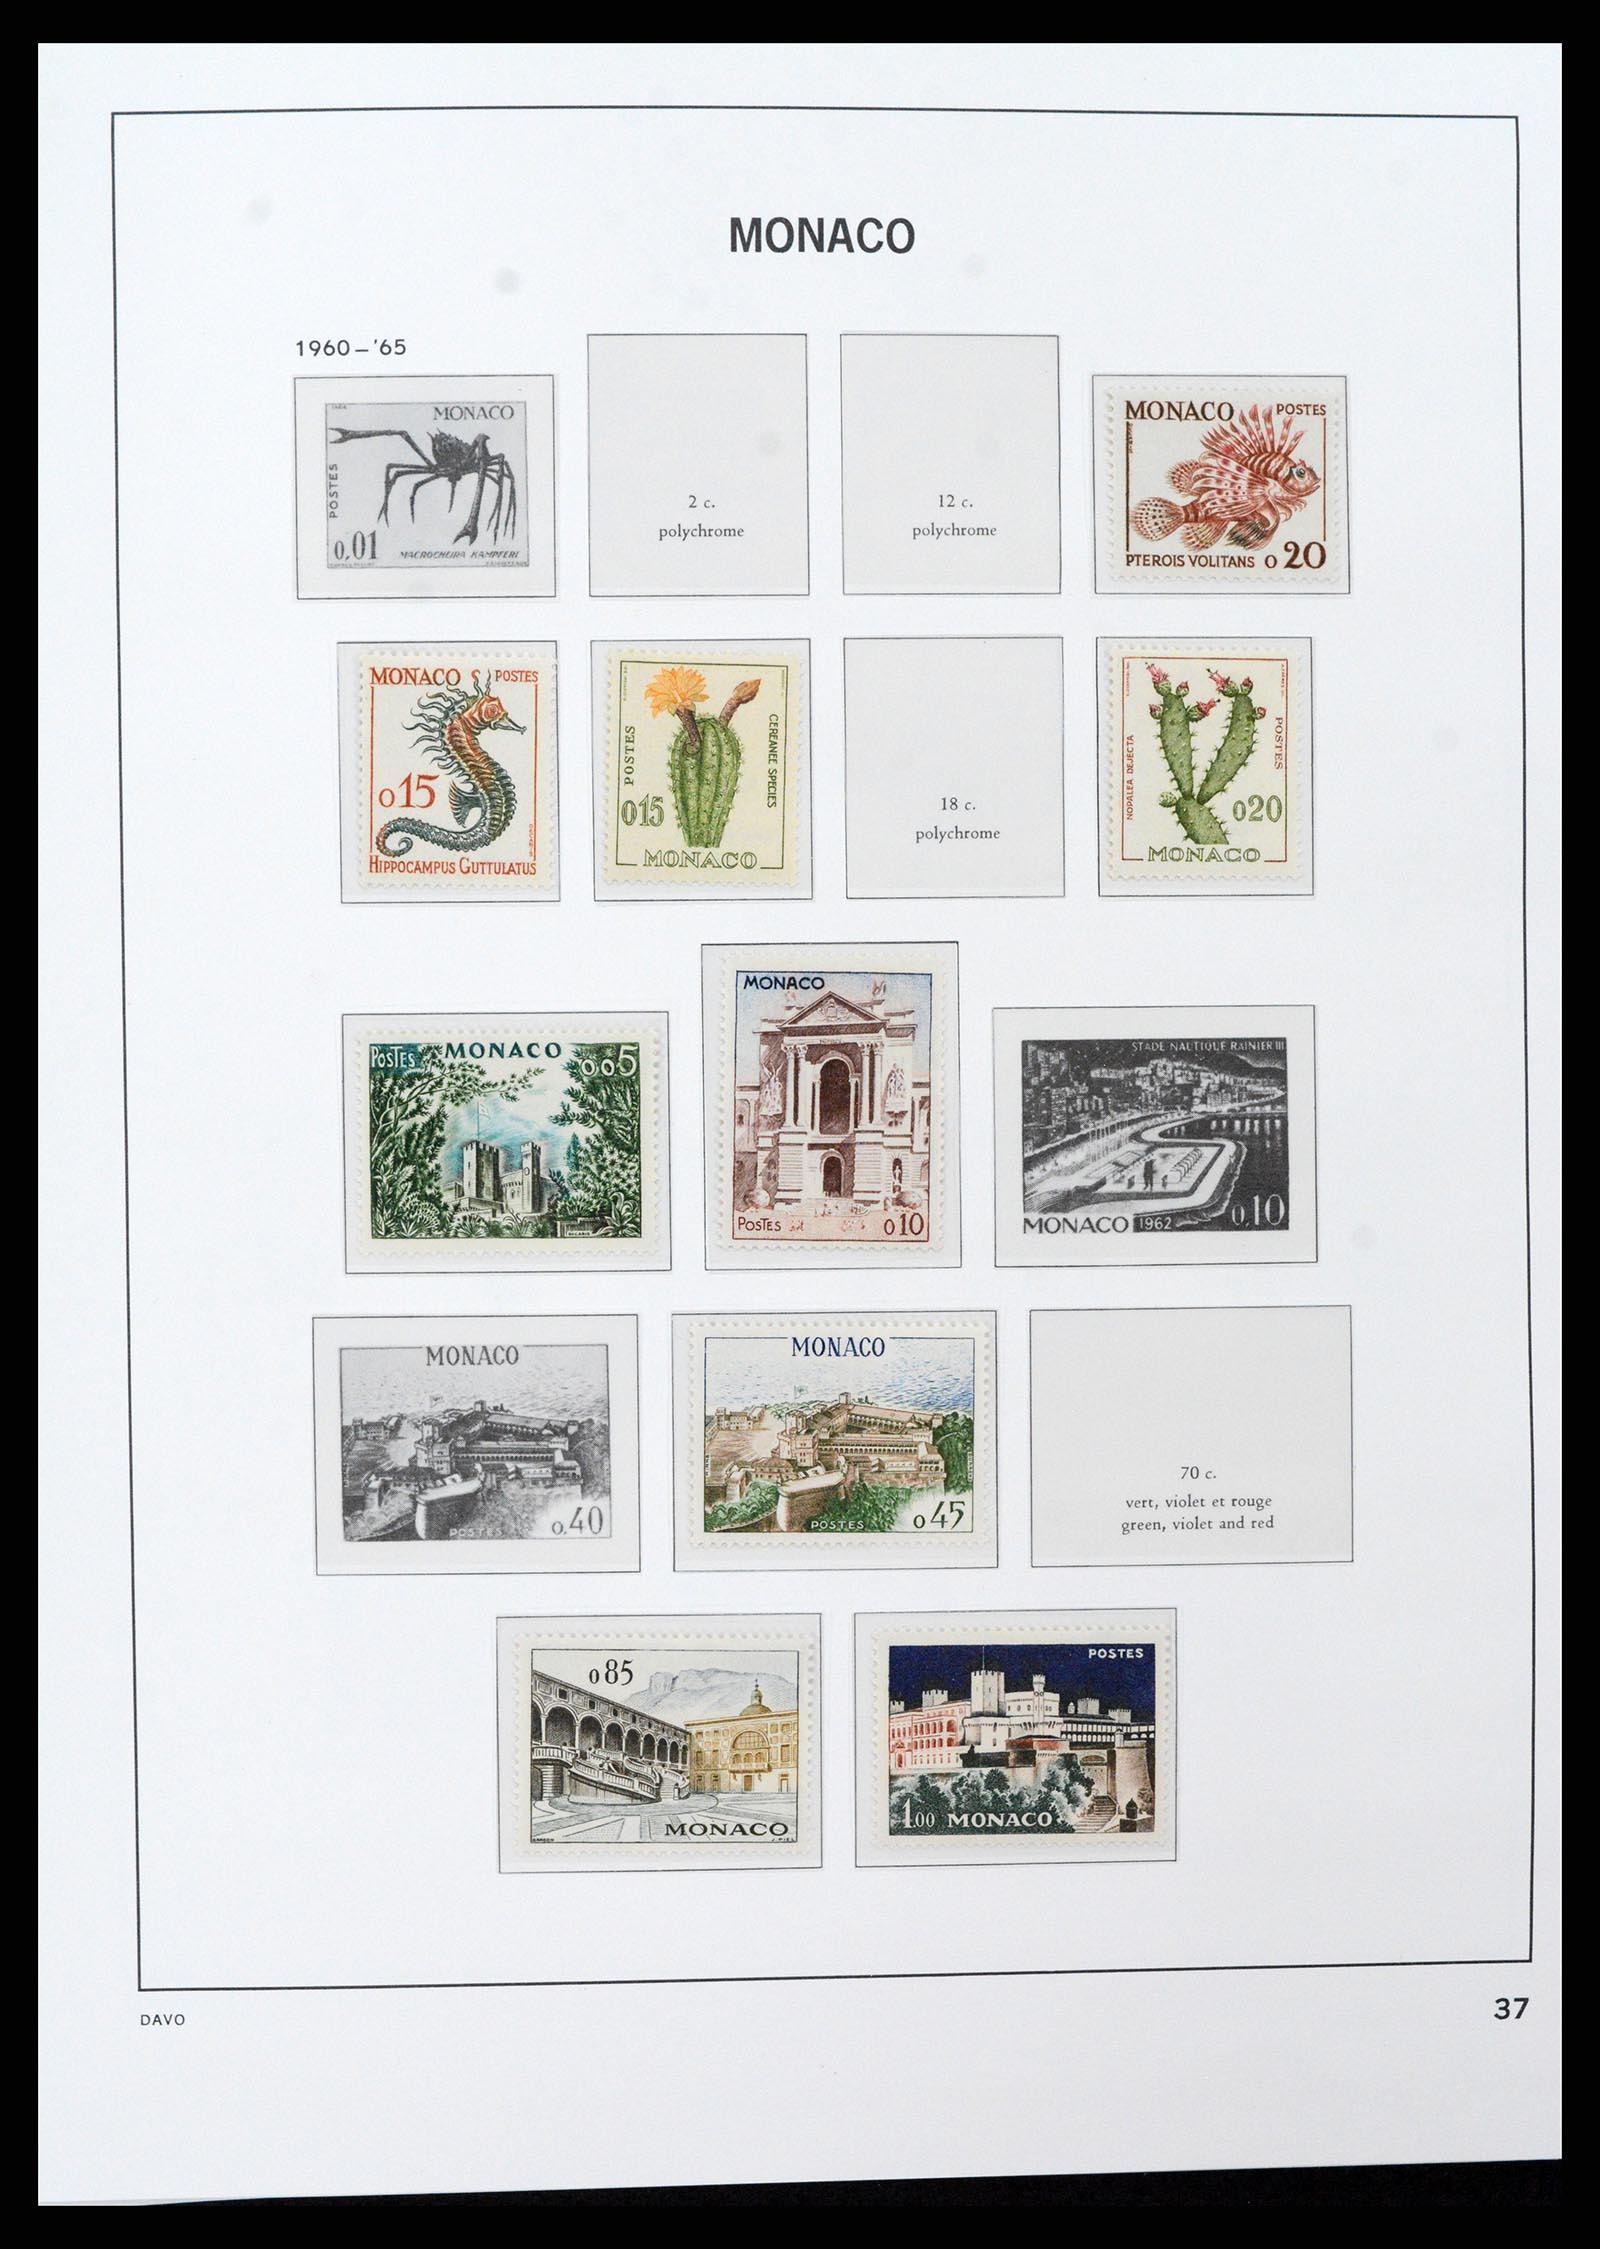 37279 037 - Postzegelverzameling 37279 Monaco 1885-1969.